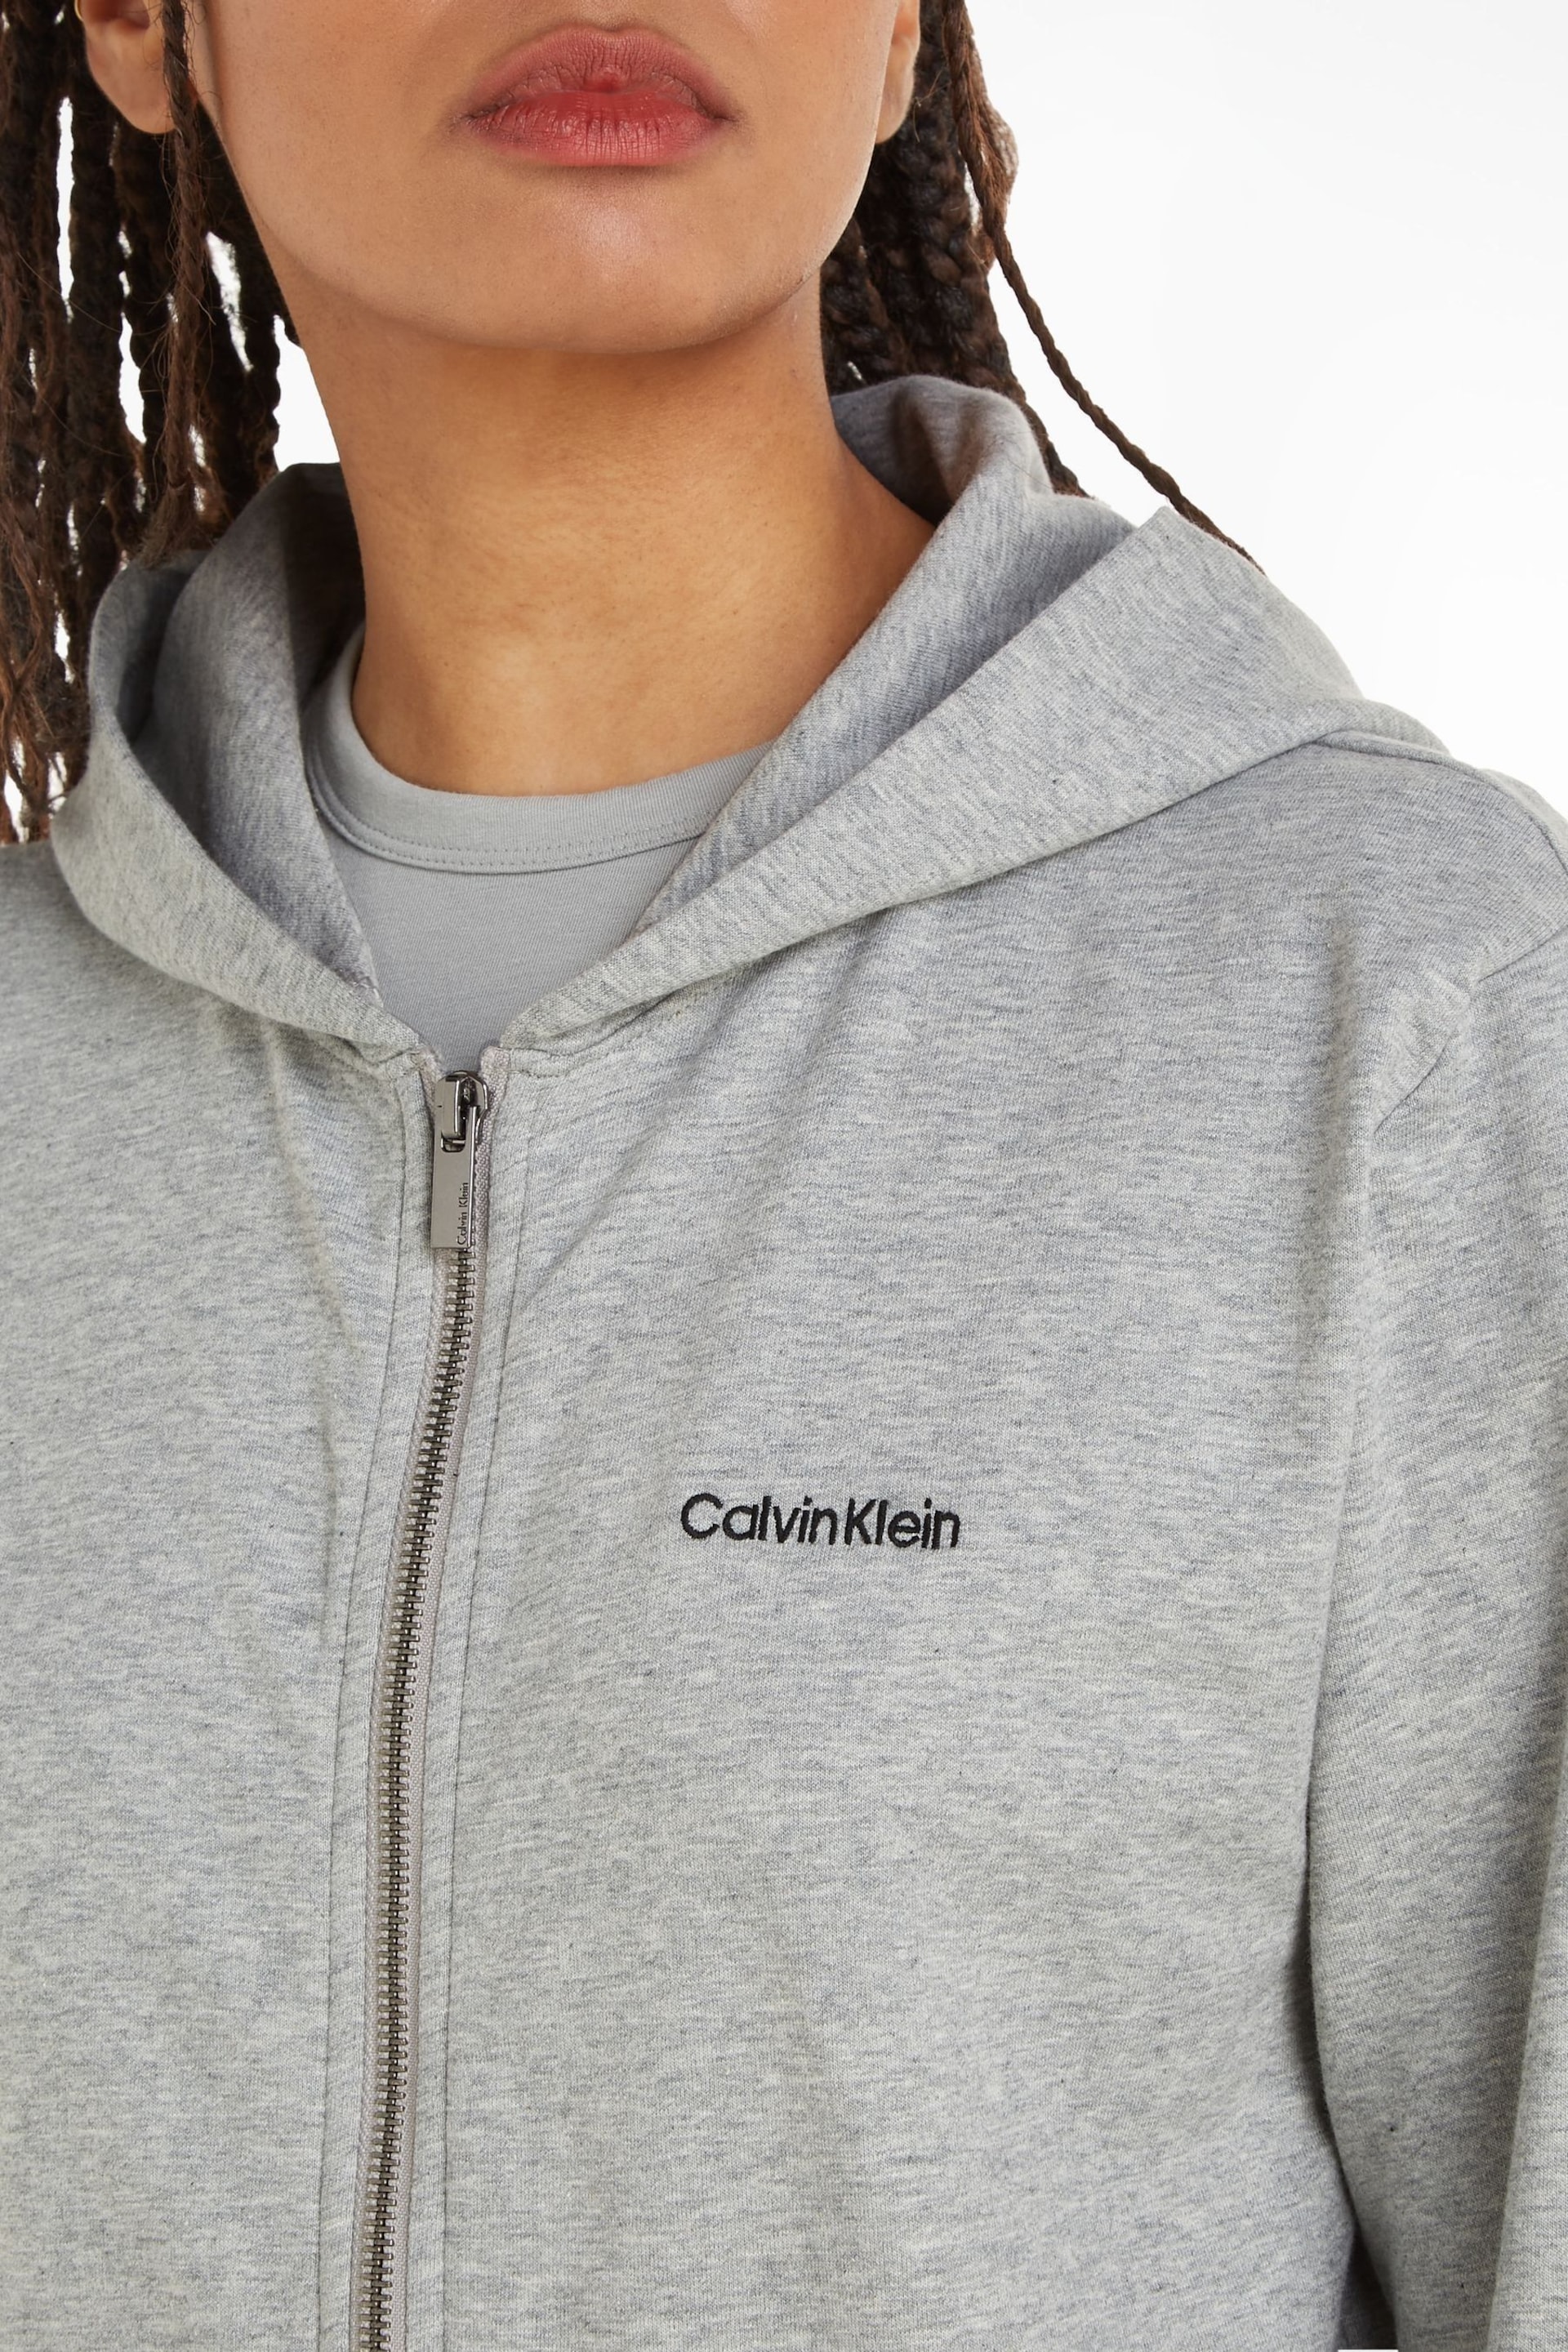 Calvin Klein Grey Modern Cotton Loungewear Full Zip Hoodie - Image 3 of 6